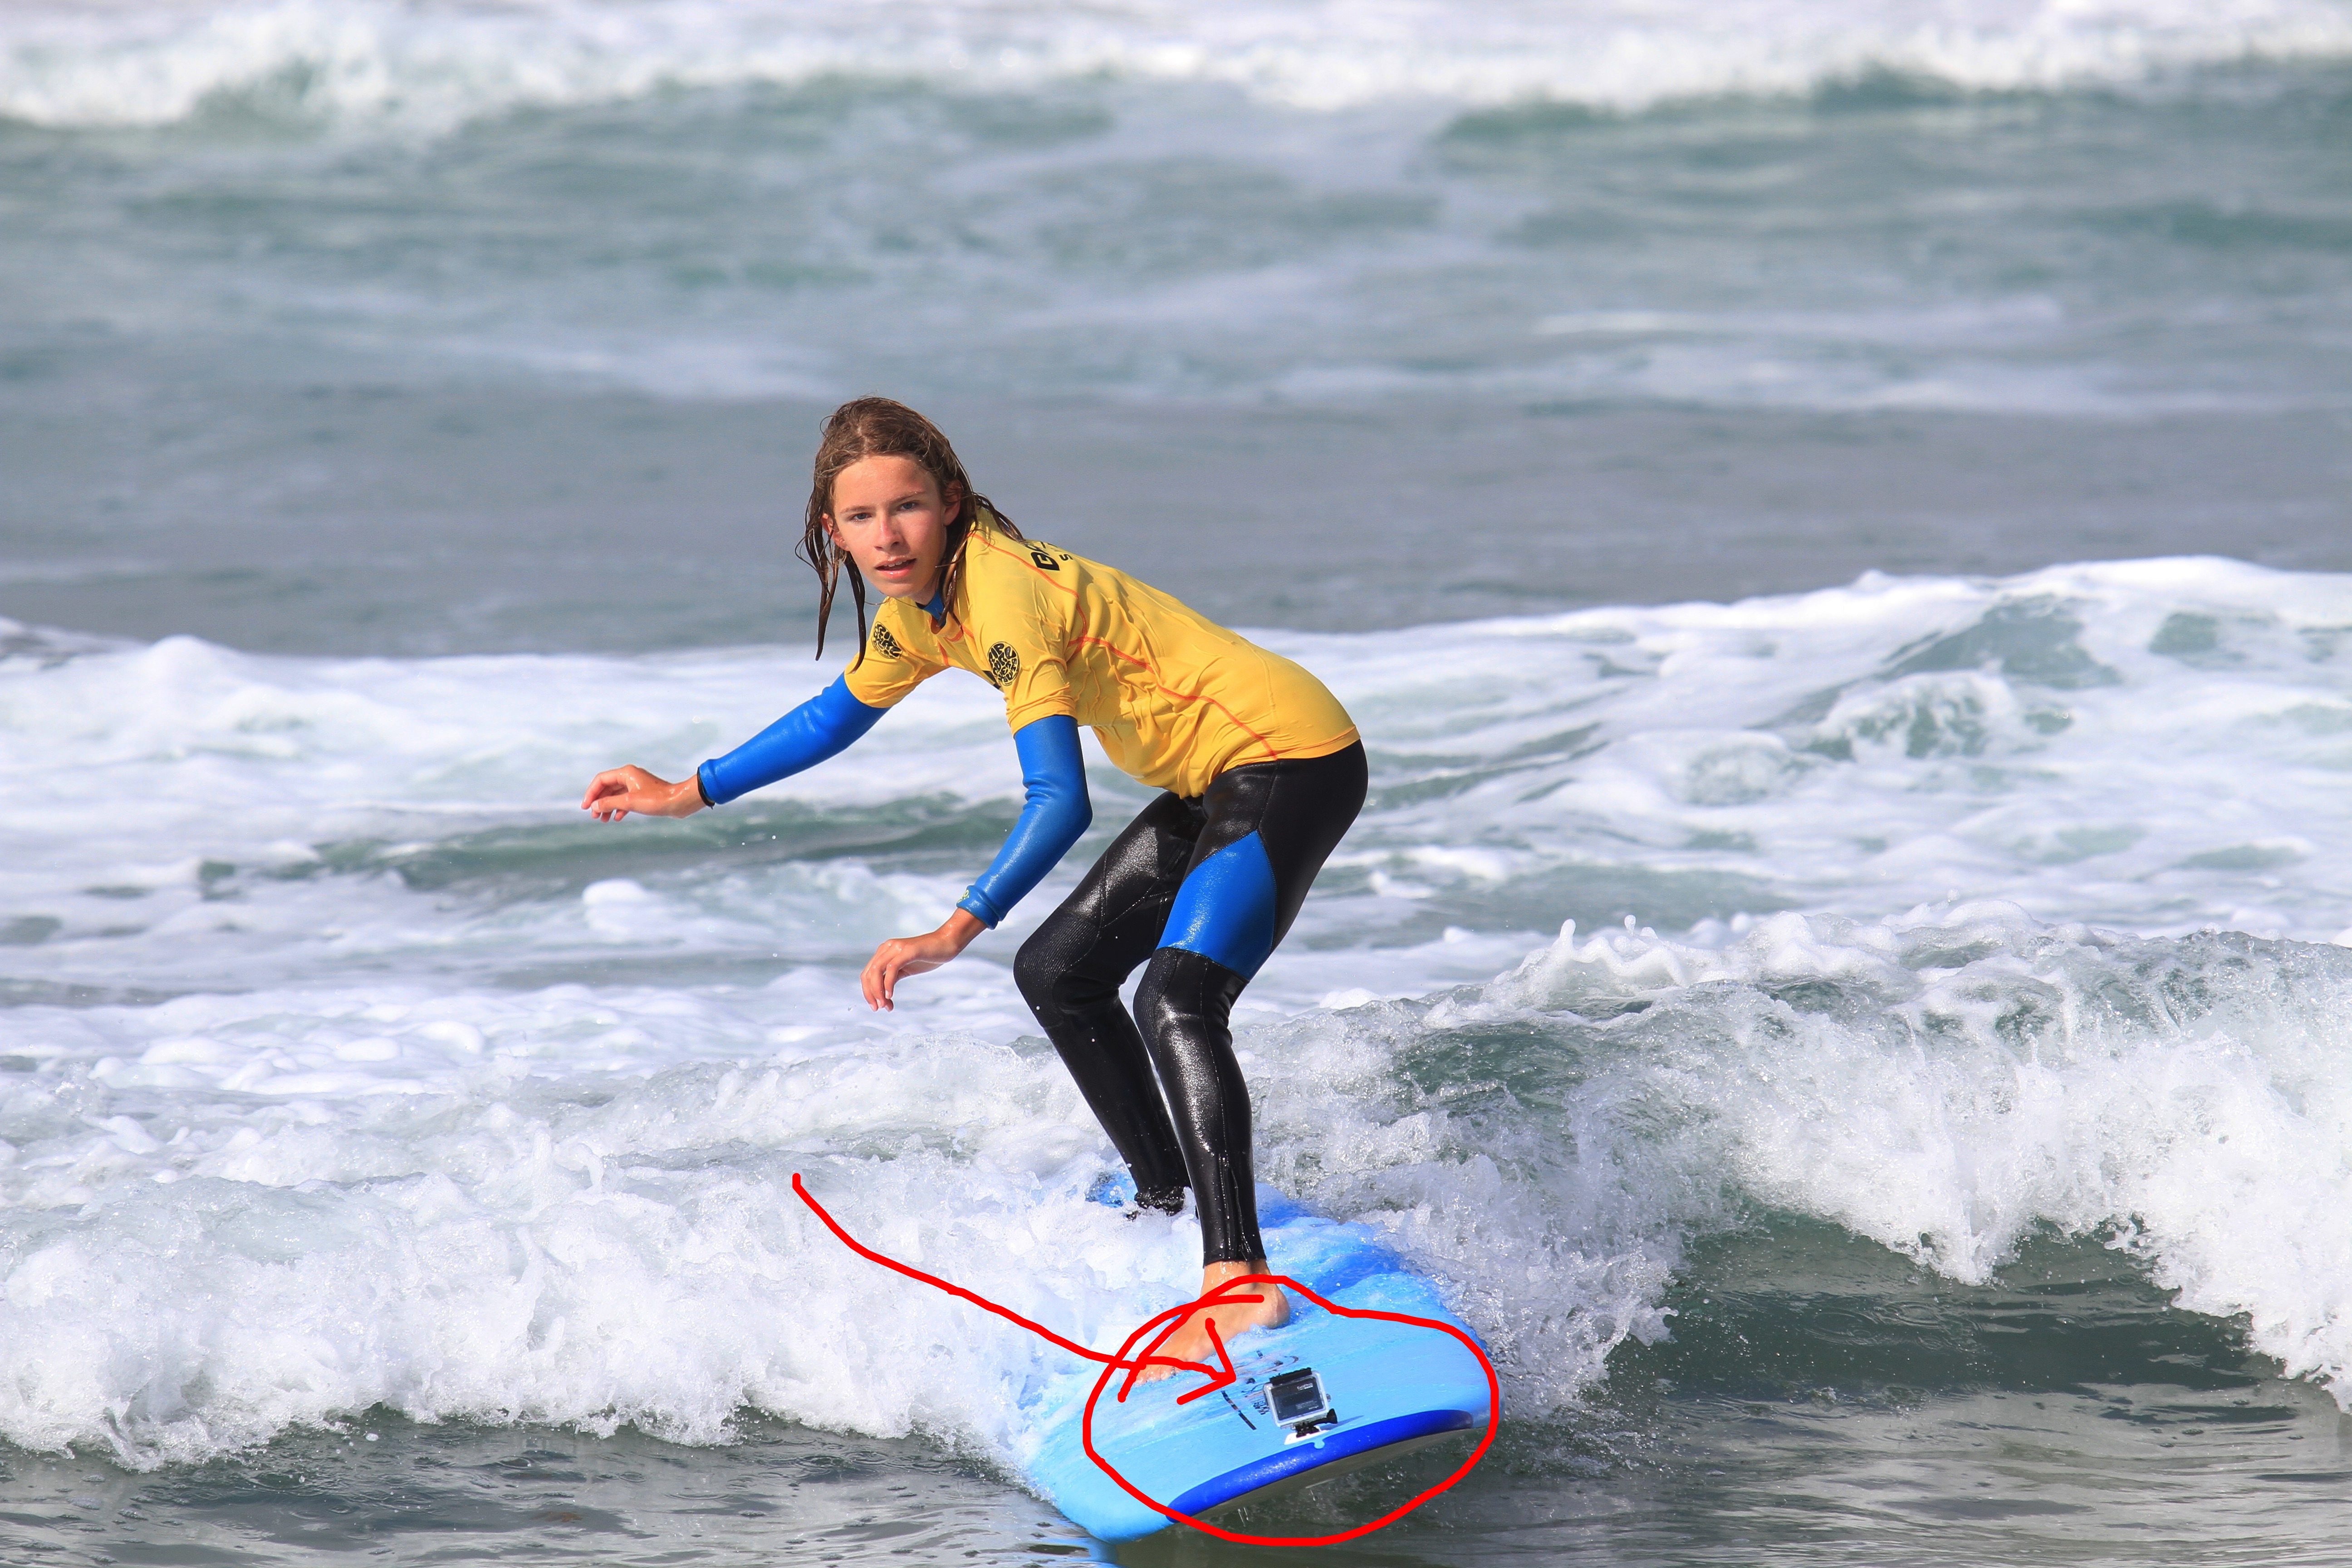 Gopro on surfboard